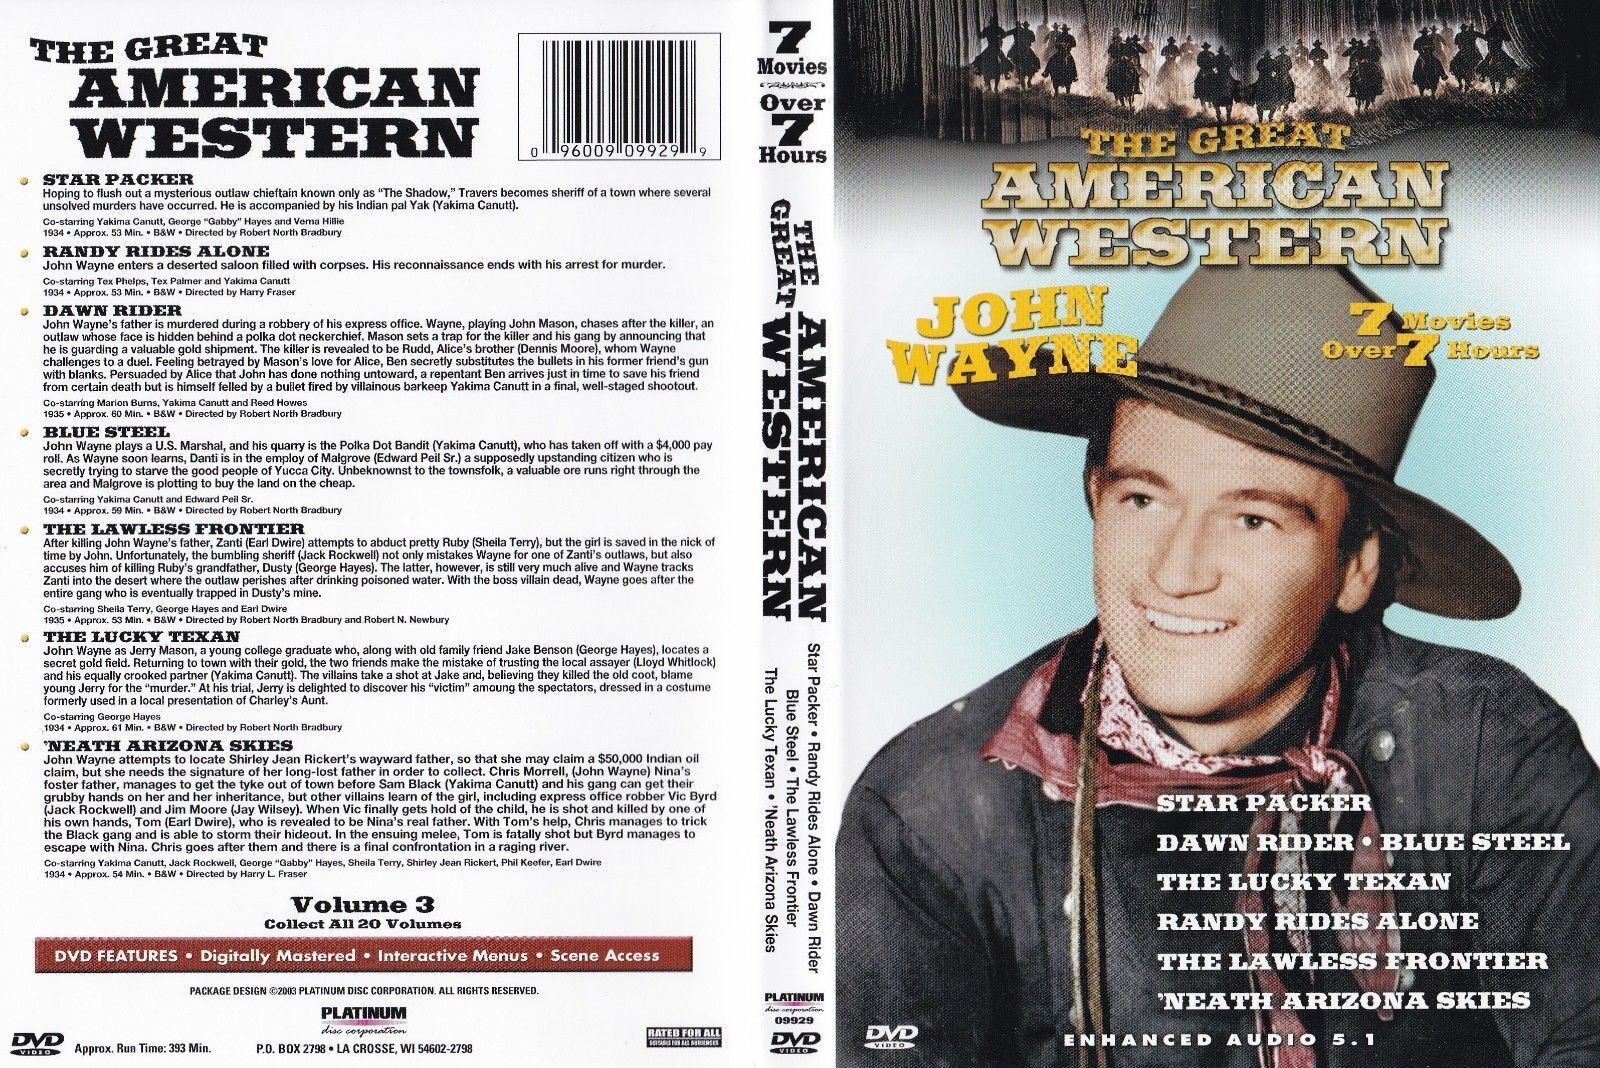 The Great American Western - John Wayne 7-Film Collection (Vol 3 B&W DVD)